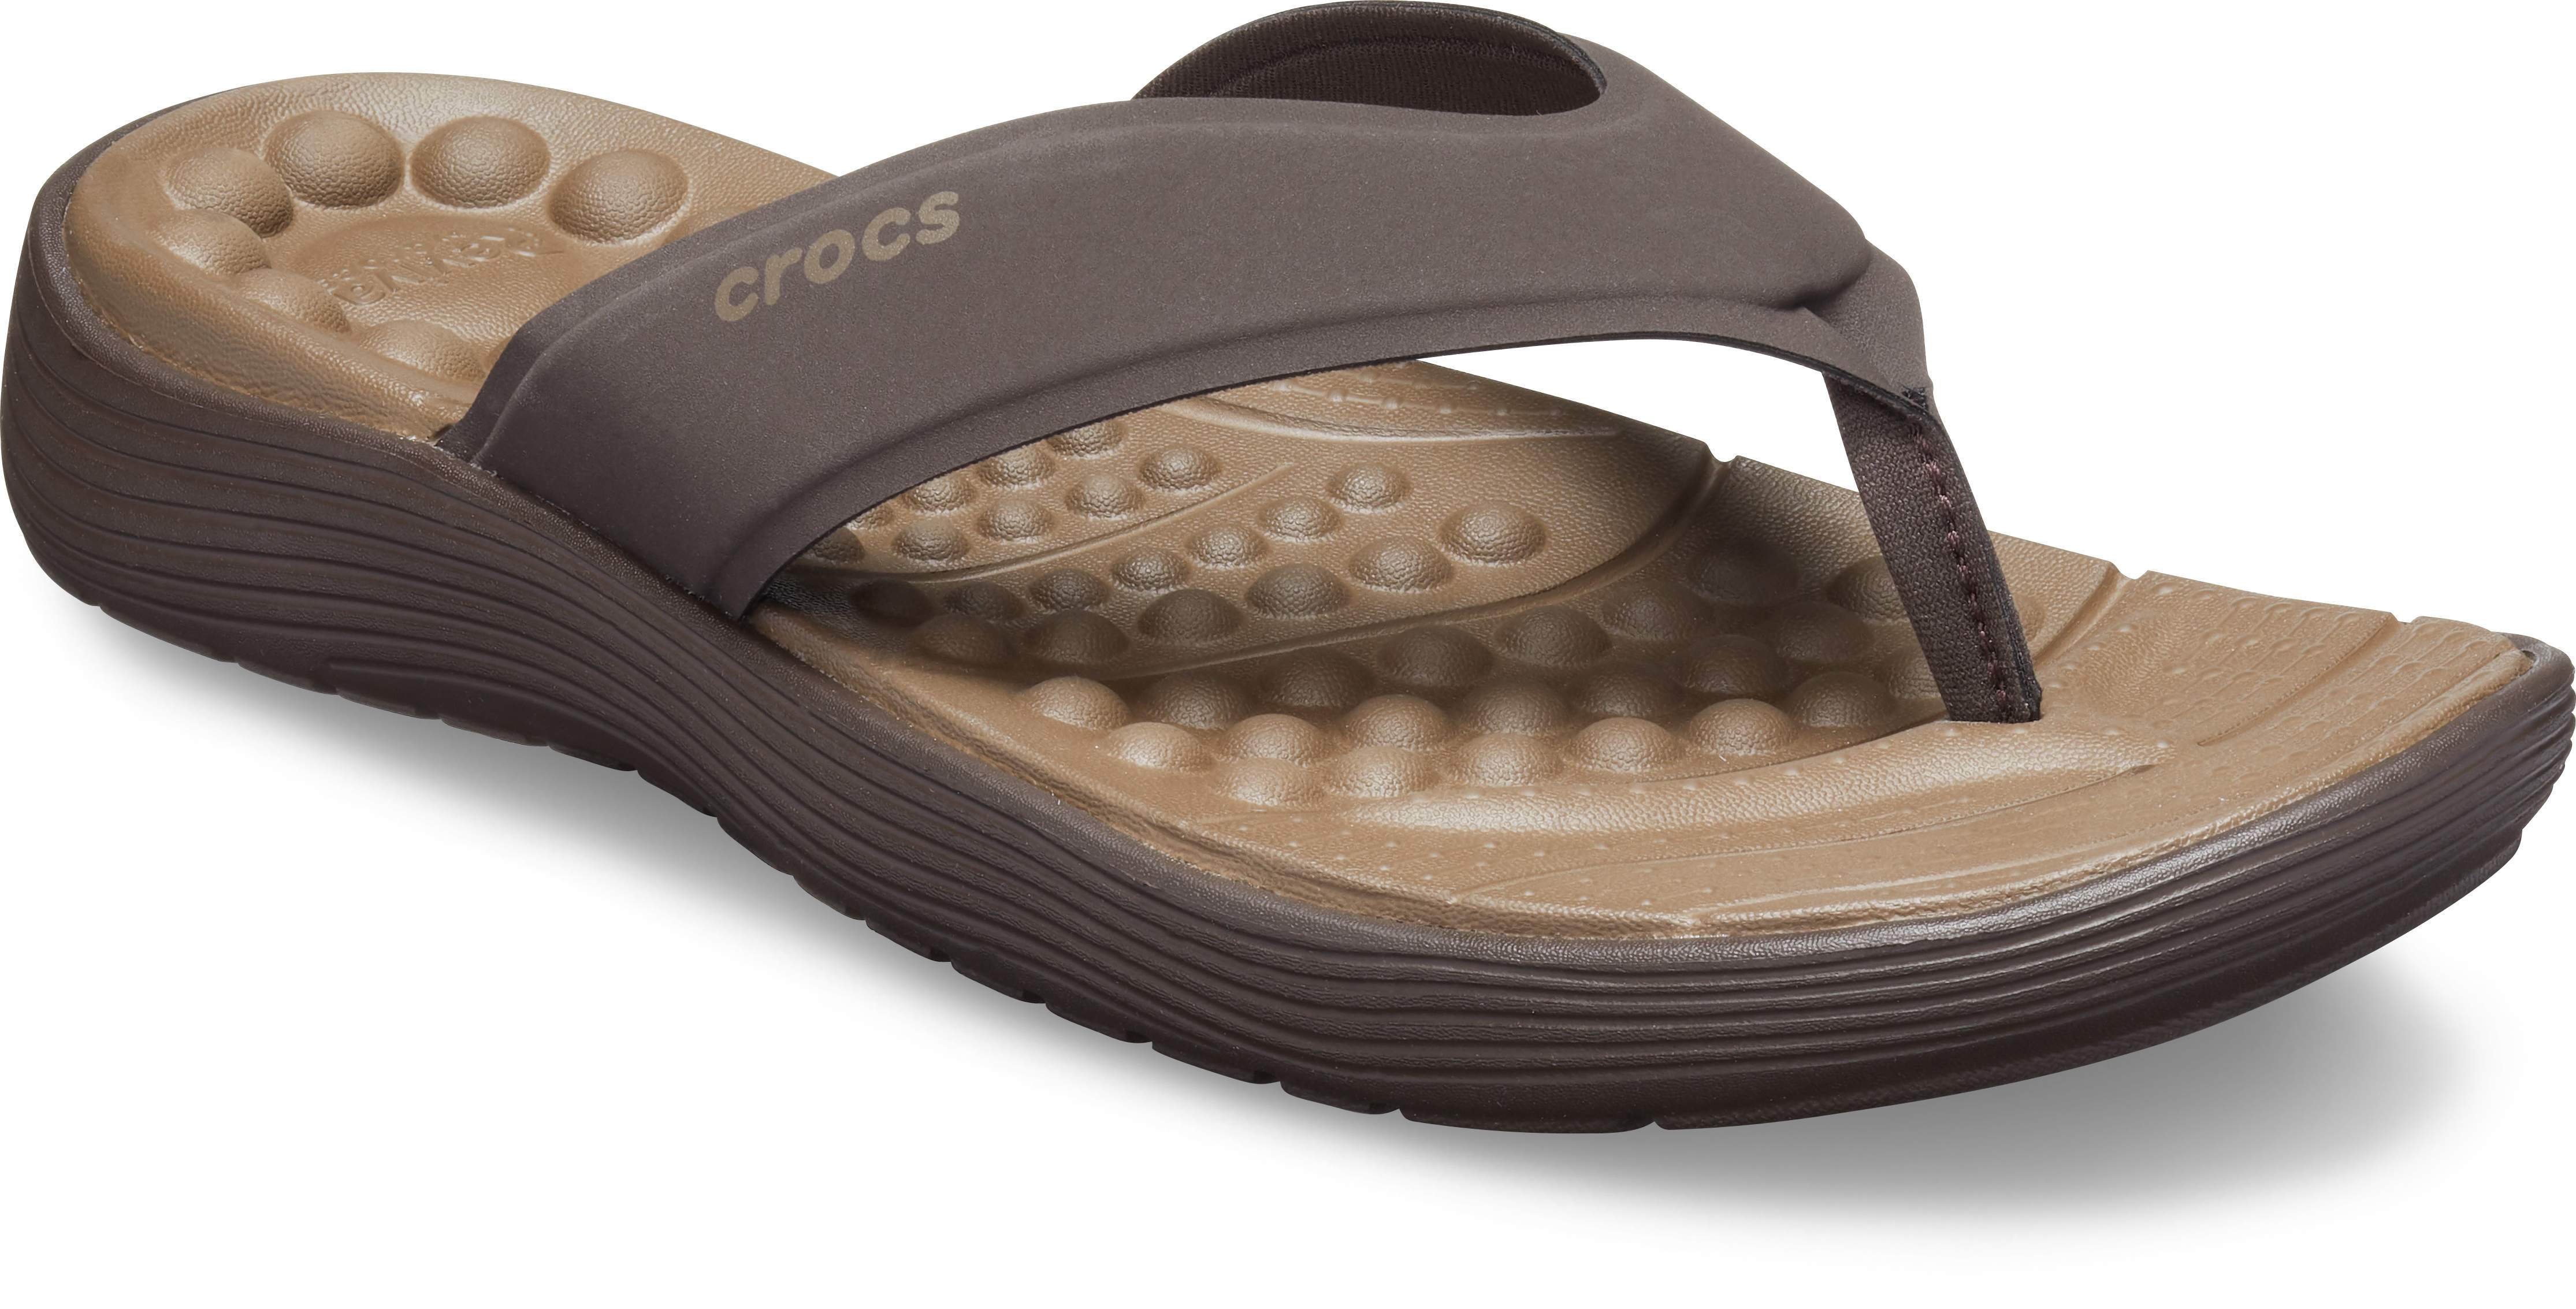 crocs under 200